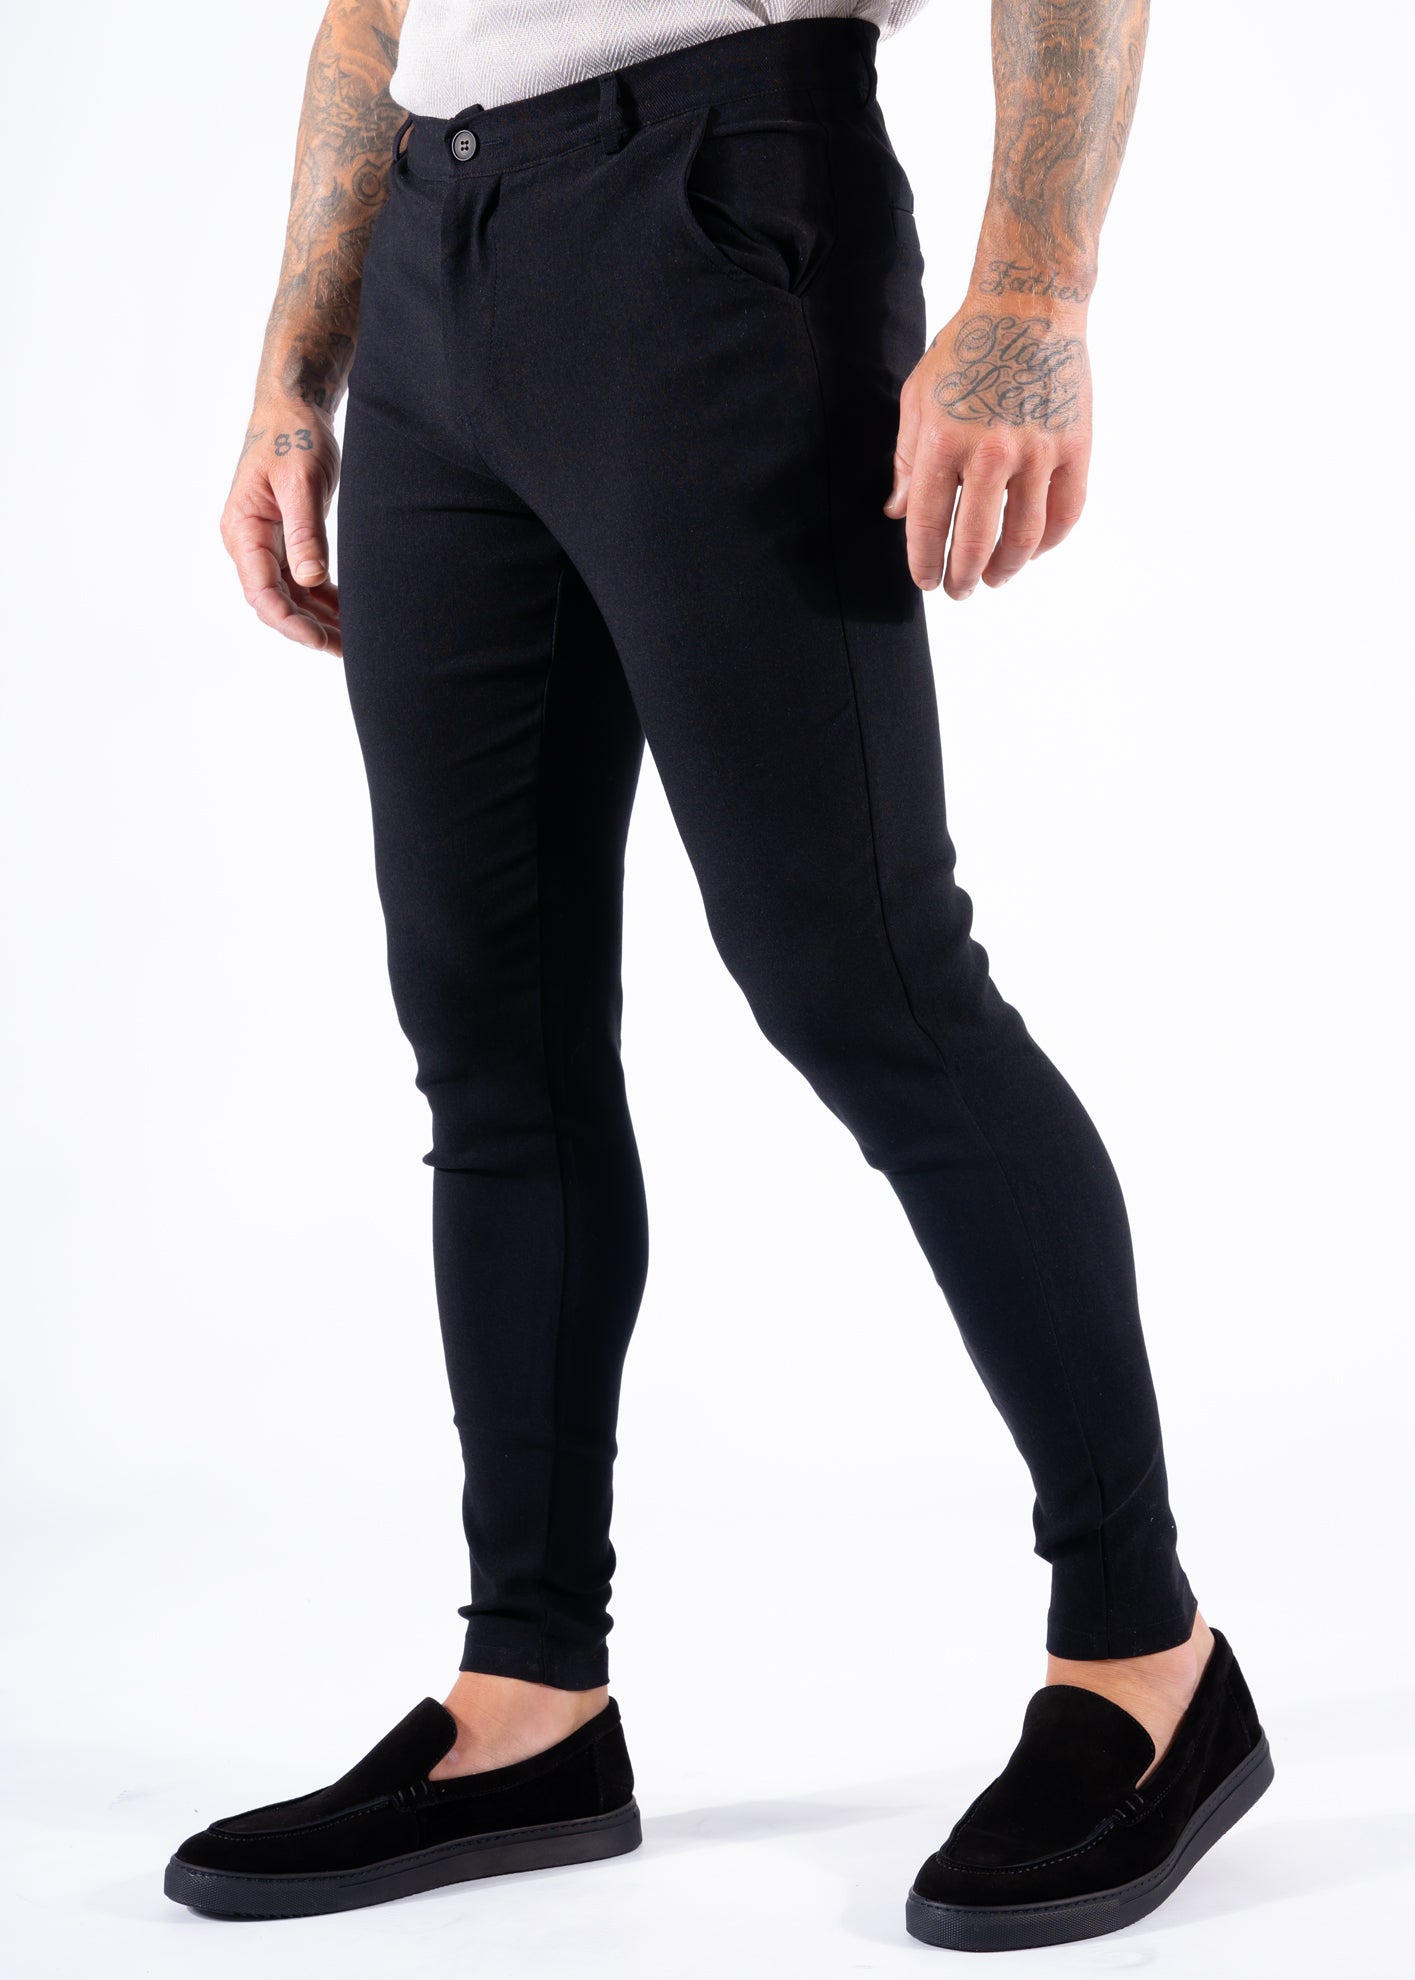 Super stretch pantalon black